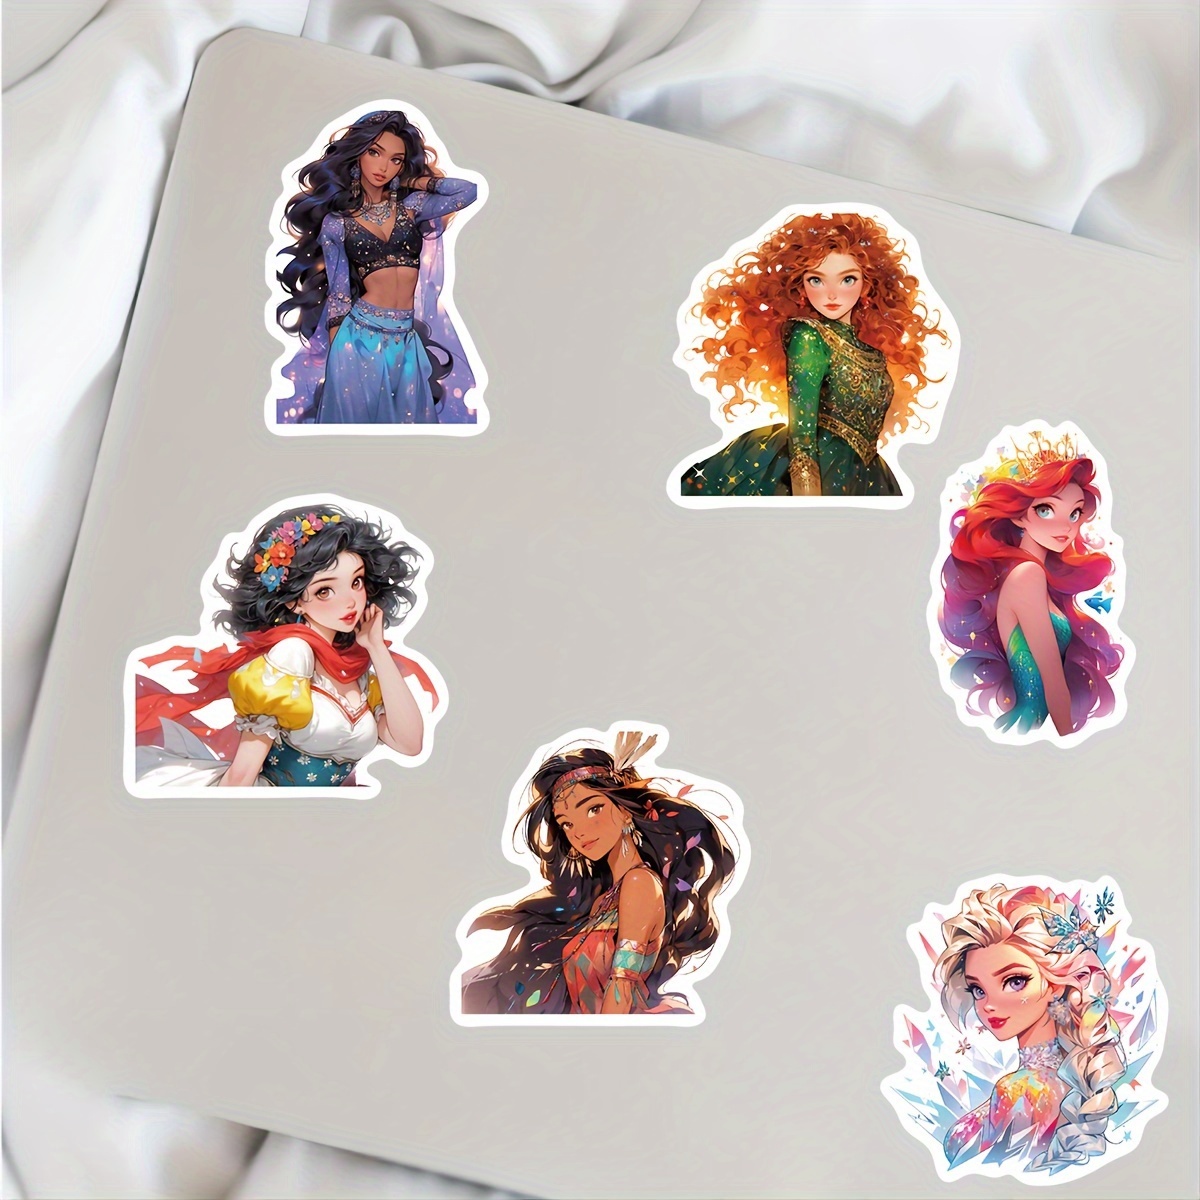 100pcs Disney Stickers, Cartoon Princess Stickers for Laptop, Notebooks, Luggage, Water Bottles. Vinyl Waterproof Cute Stickers Pack for Kids Teens